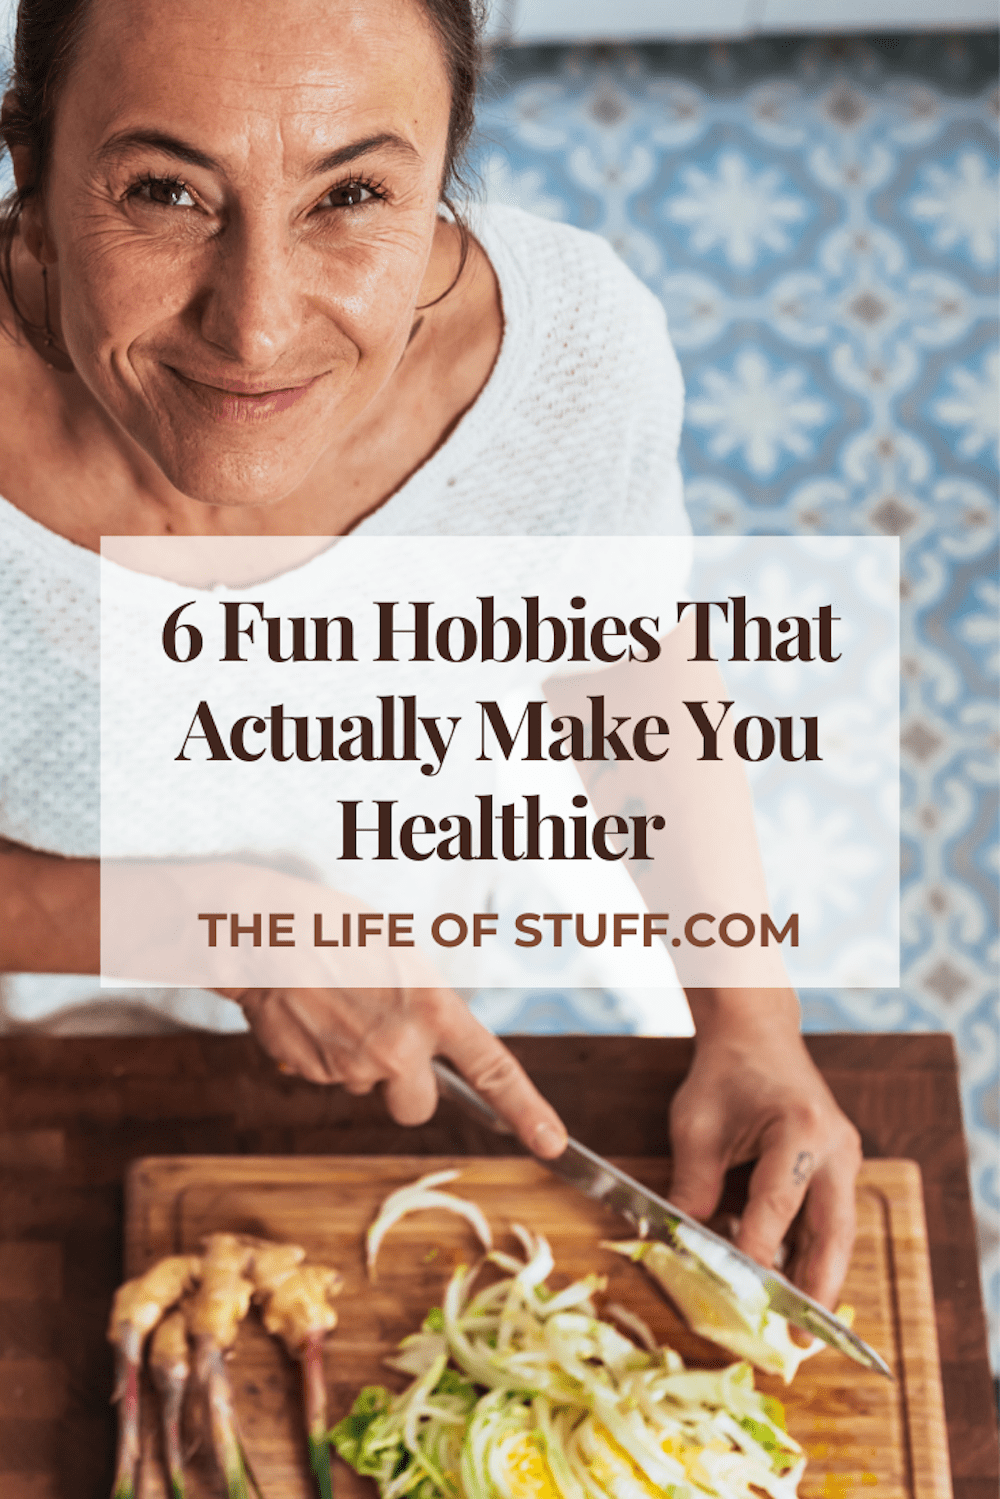 6 Fun Hobbies That Actually Make You Healthier - The Life of Stuff